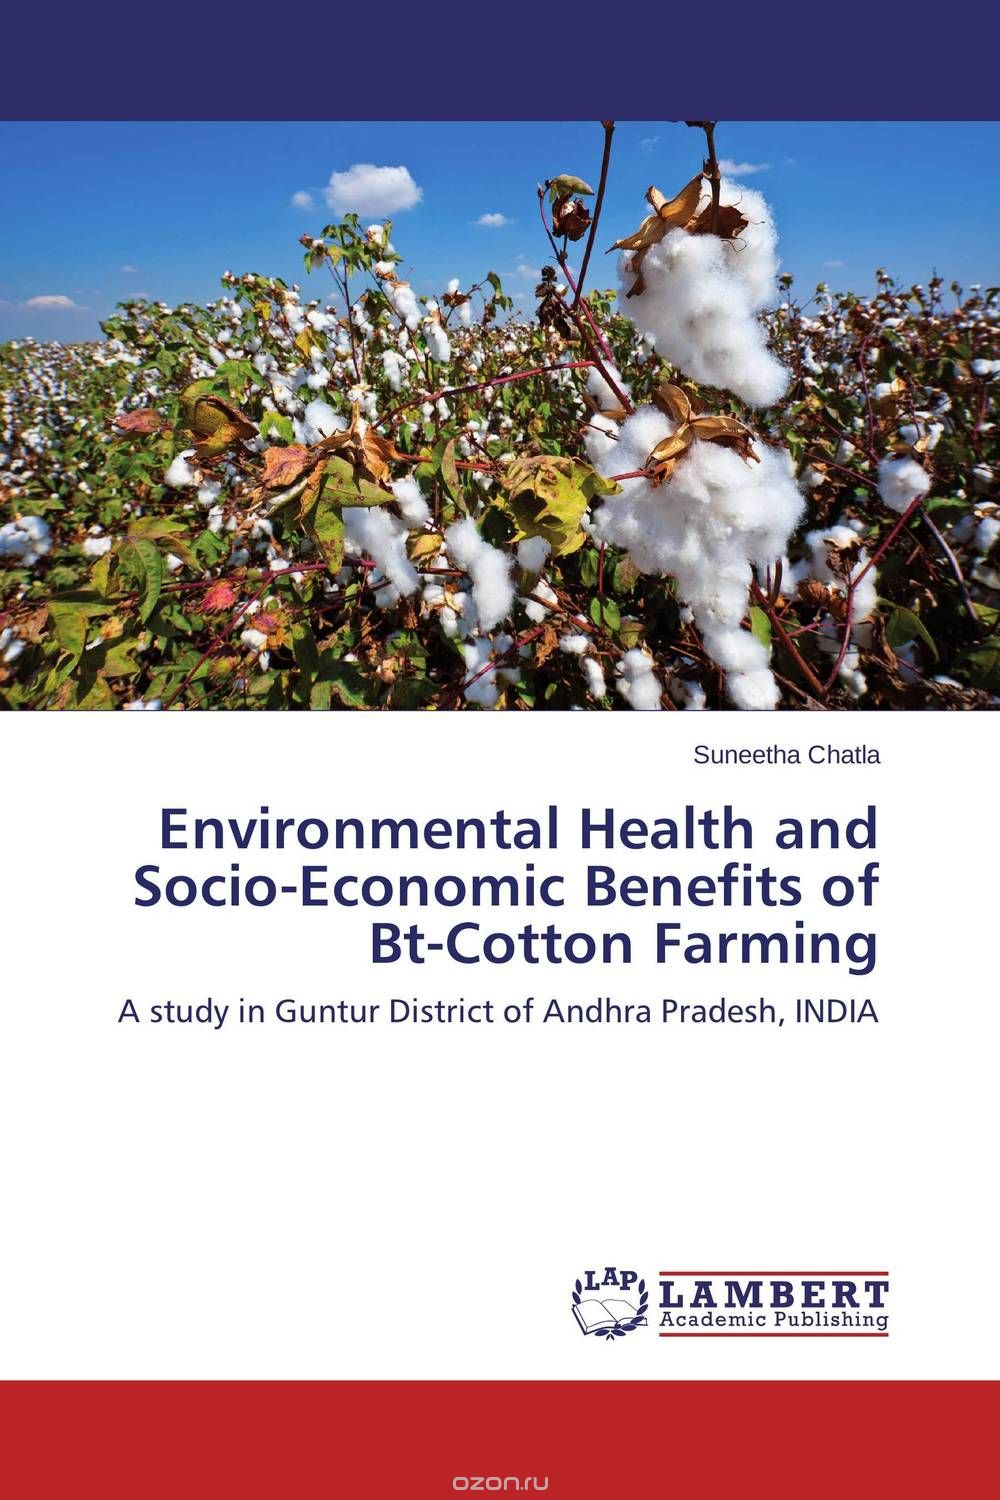 Скачать книгу "Environmental Health and Socio-Economic Benefits of Bt-Cotton Farming"